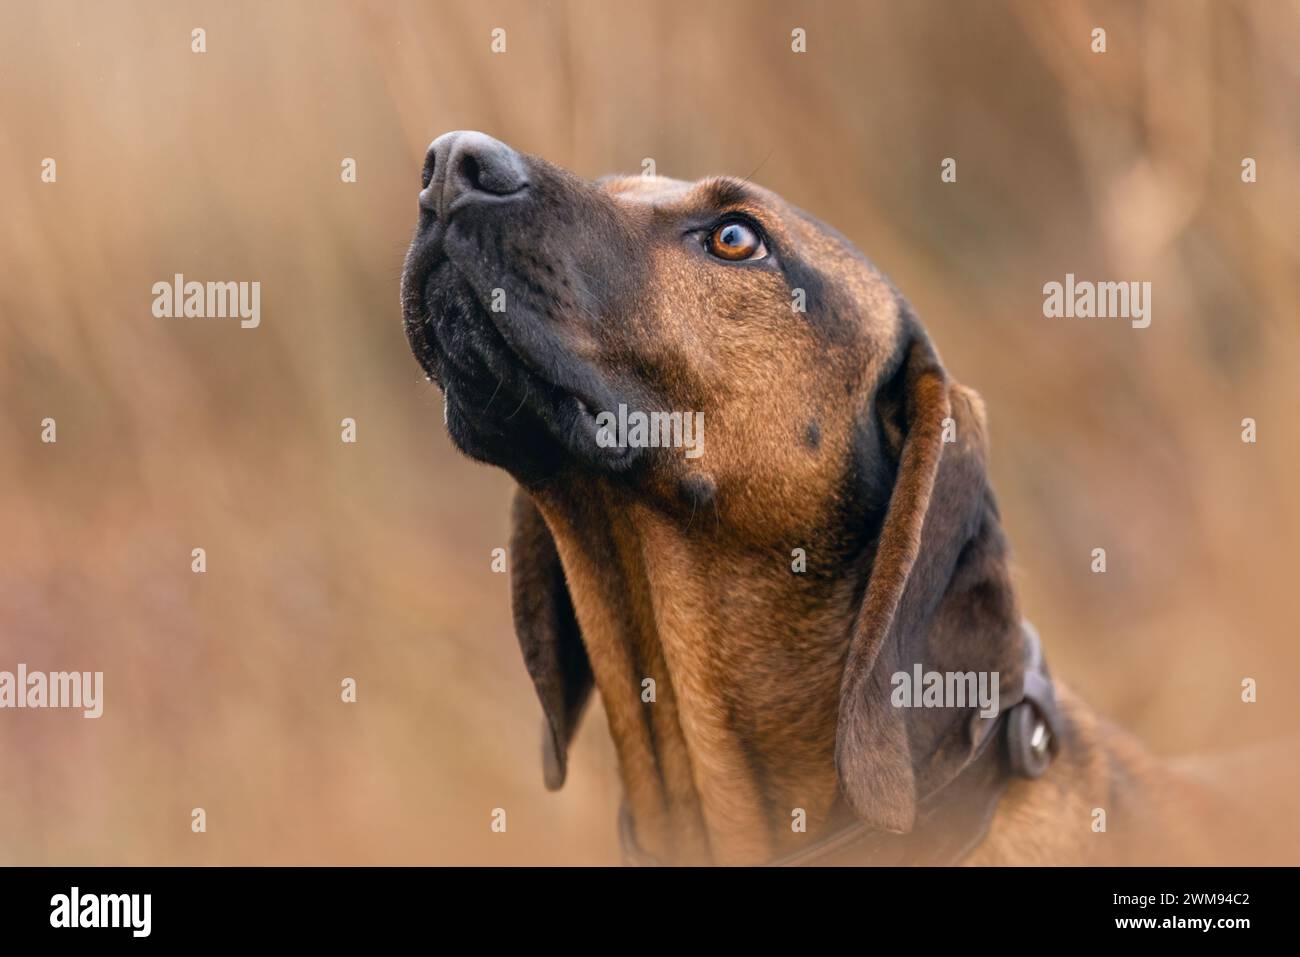 Portrait de tête d'un chien de montagne bavarois, bayerischer Gebirgsschweißhund, BGS Banque D'Images